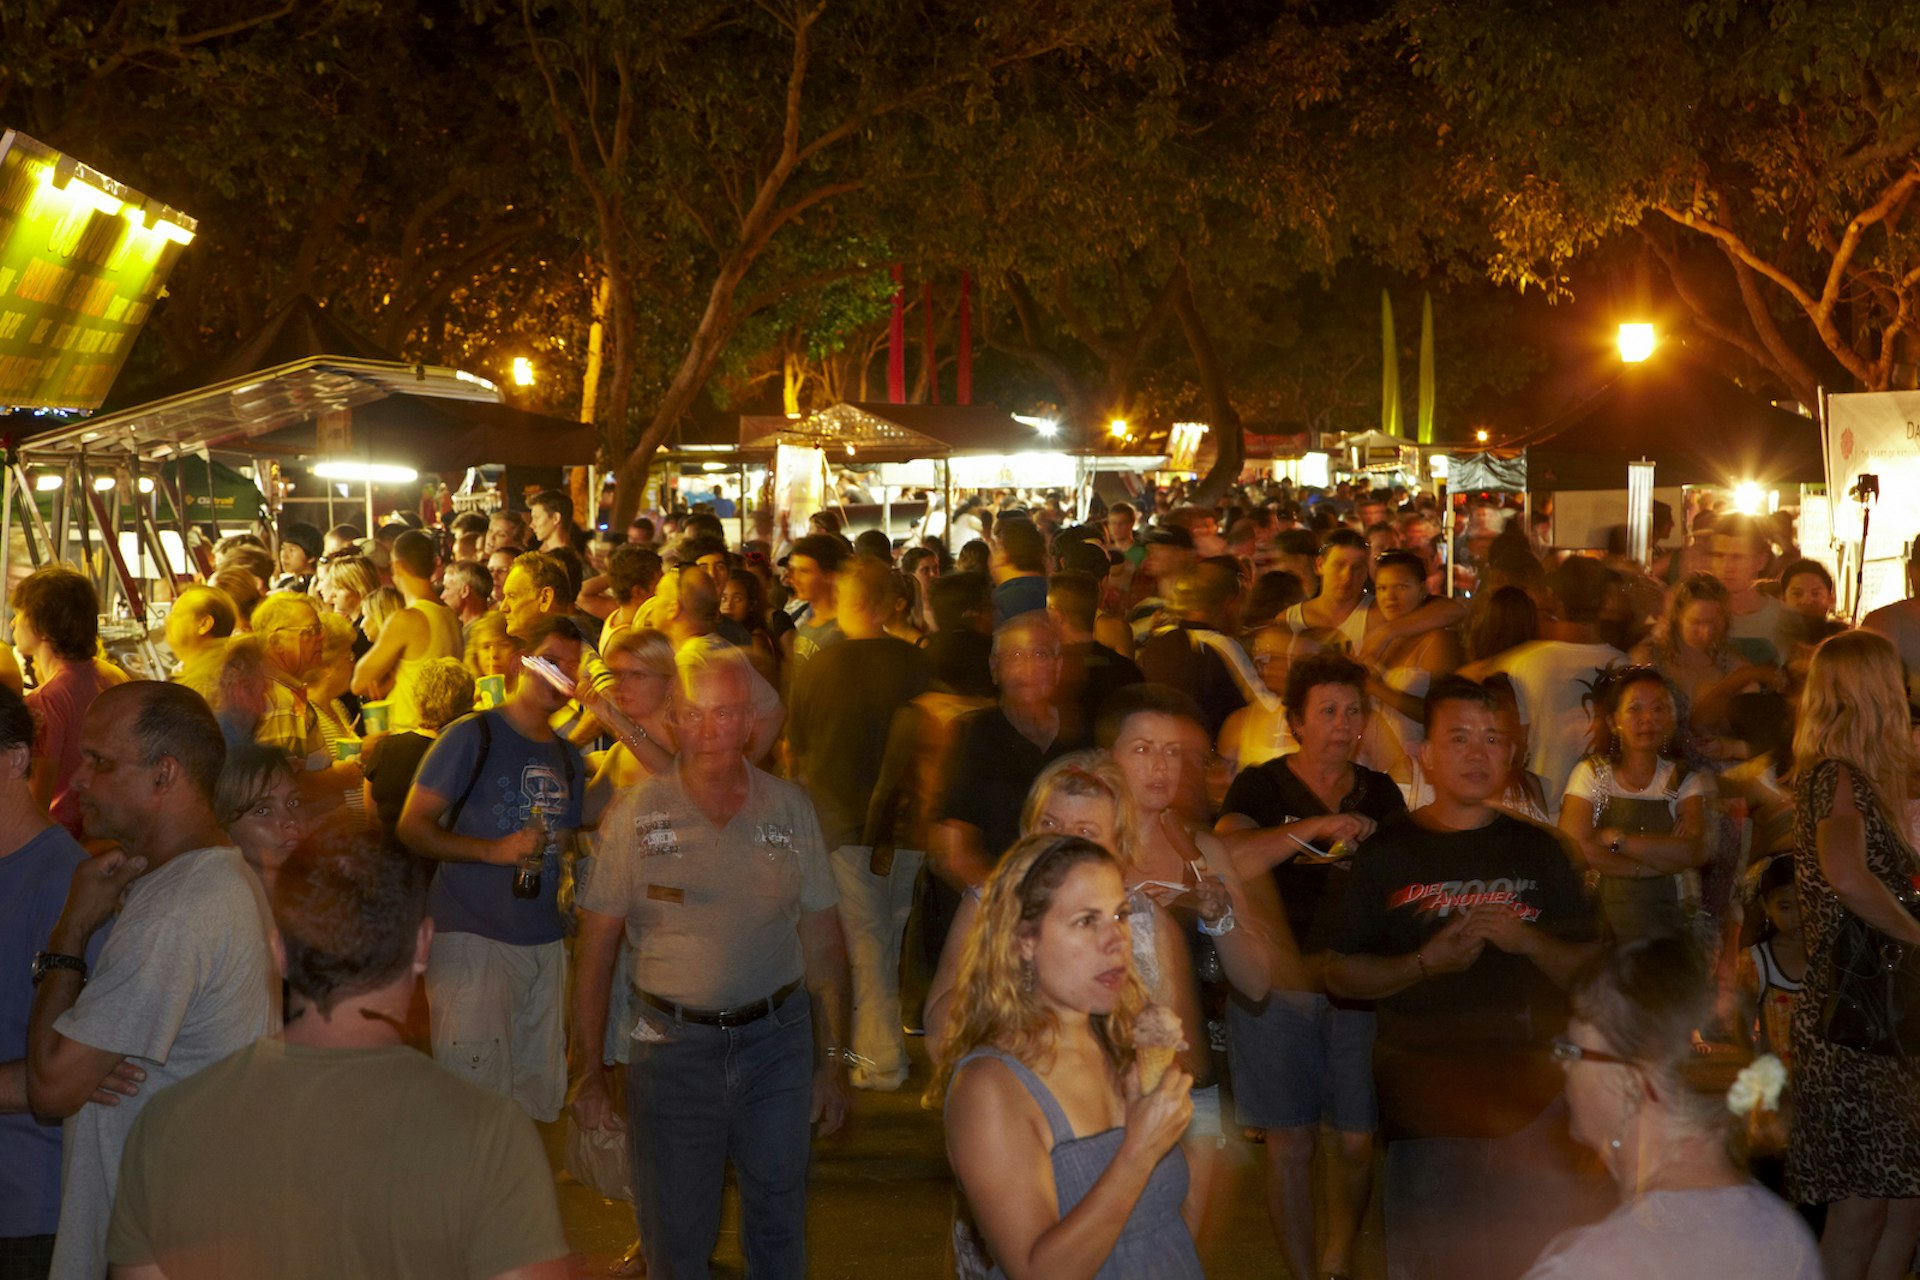 Crowds at the Mindil Beach Sunset Market in Darwin, Australia